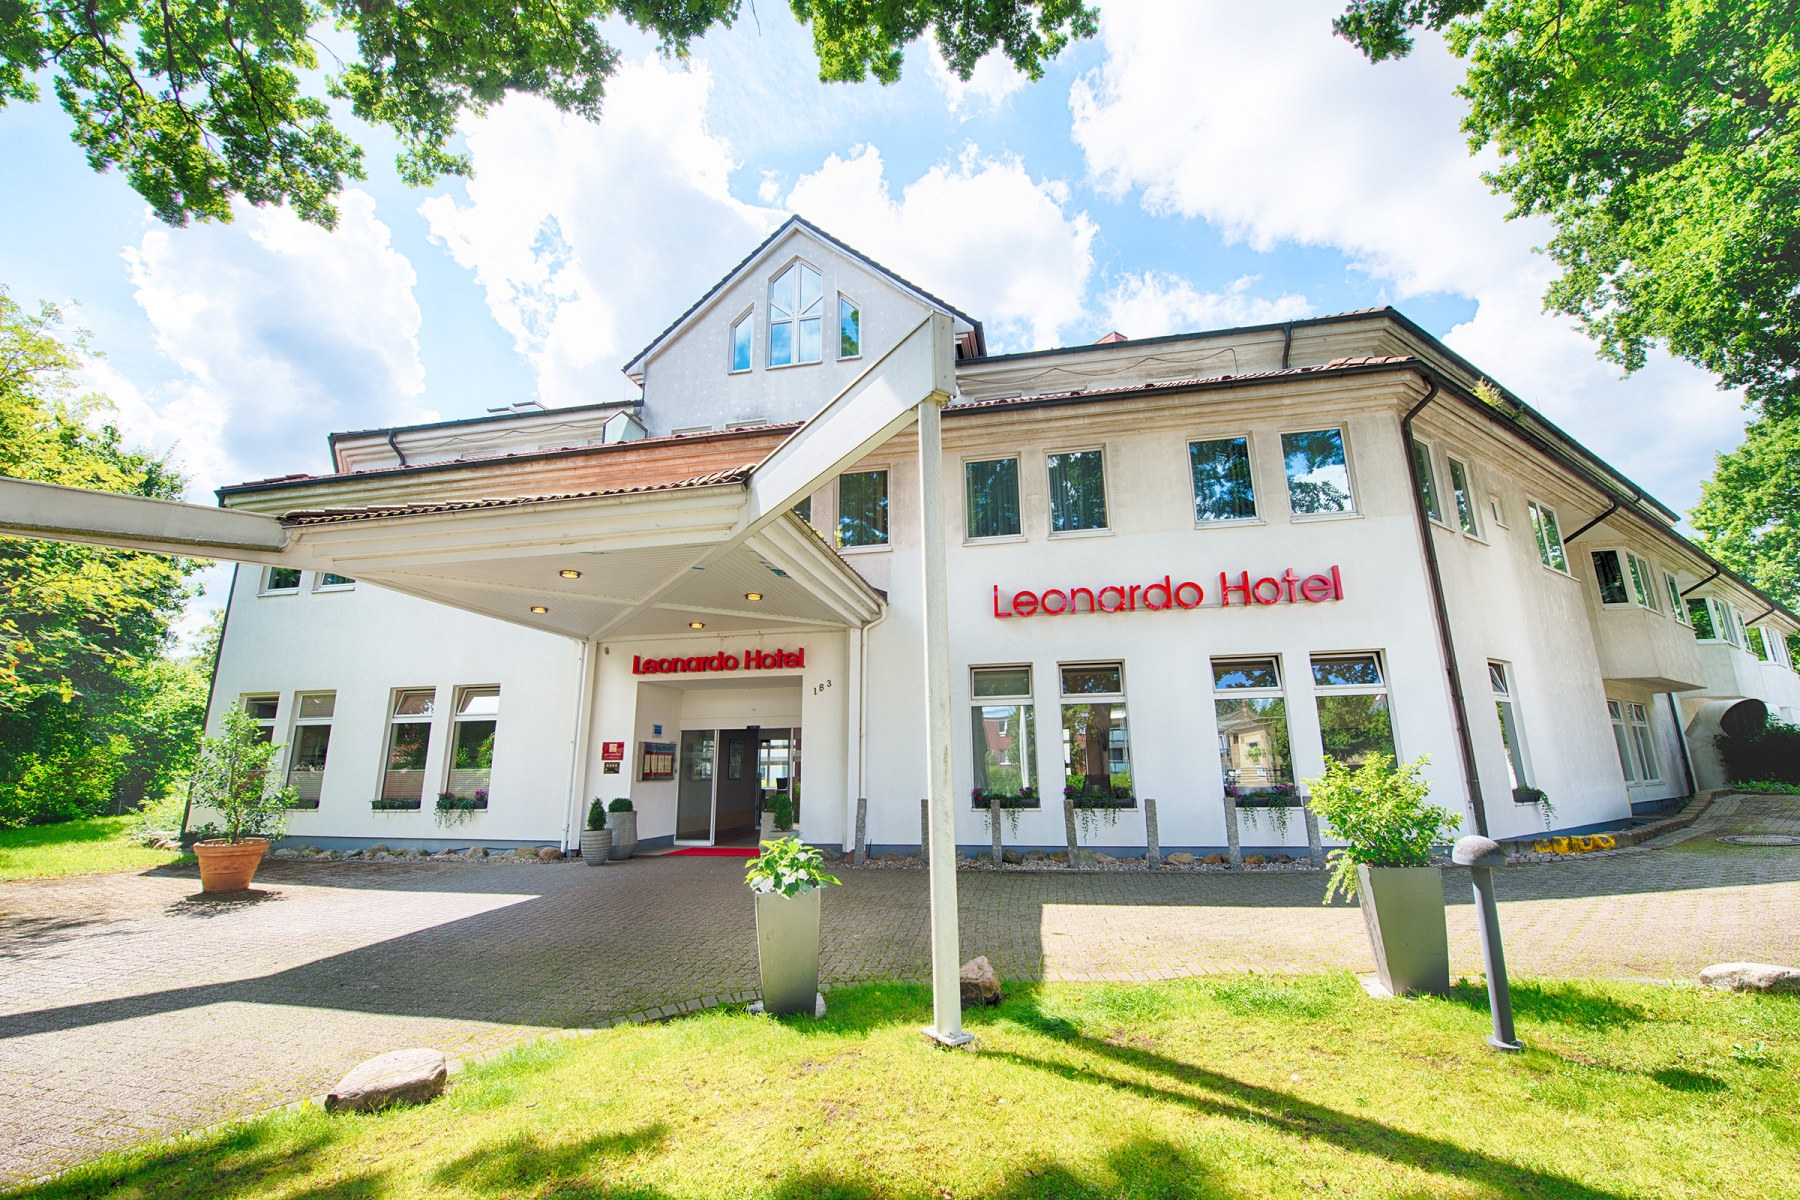 Leonardo Hotel Hamburg Airport <br/>66.67 ew <br/> <a href='http://vakantieoplossing.nl/outpage/?id=72b774ed43f7079e5e3bfbc516ac91a3' target='_blank'>View Details</a>